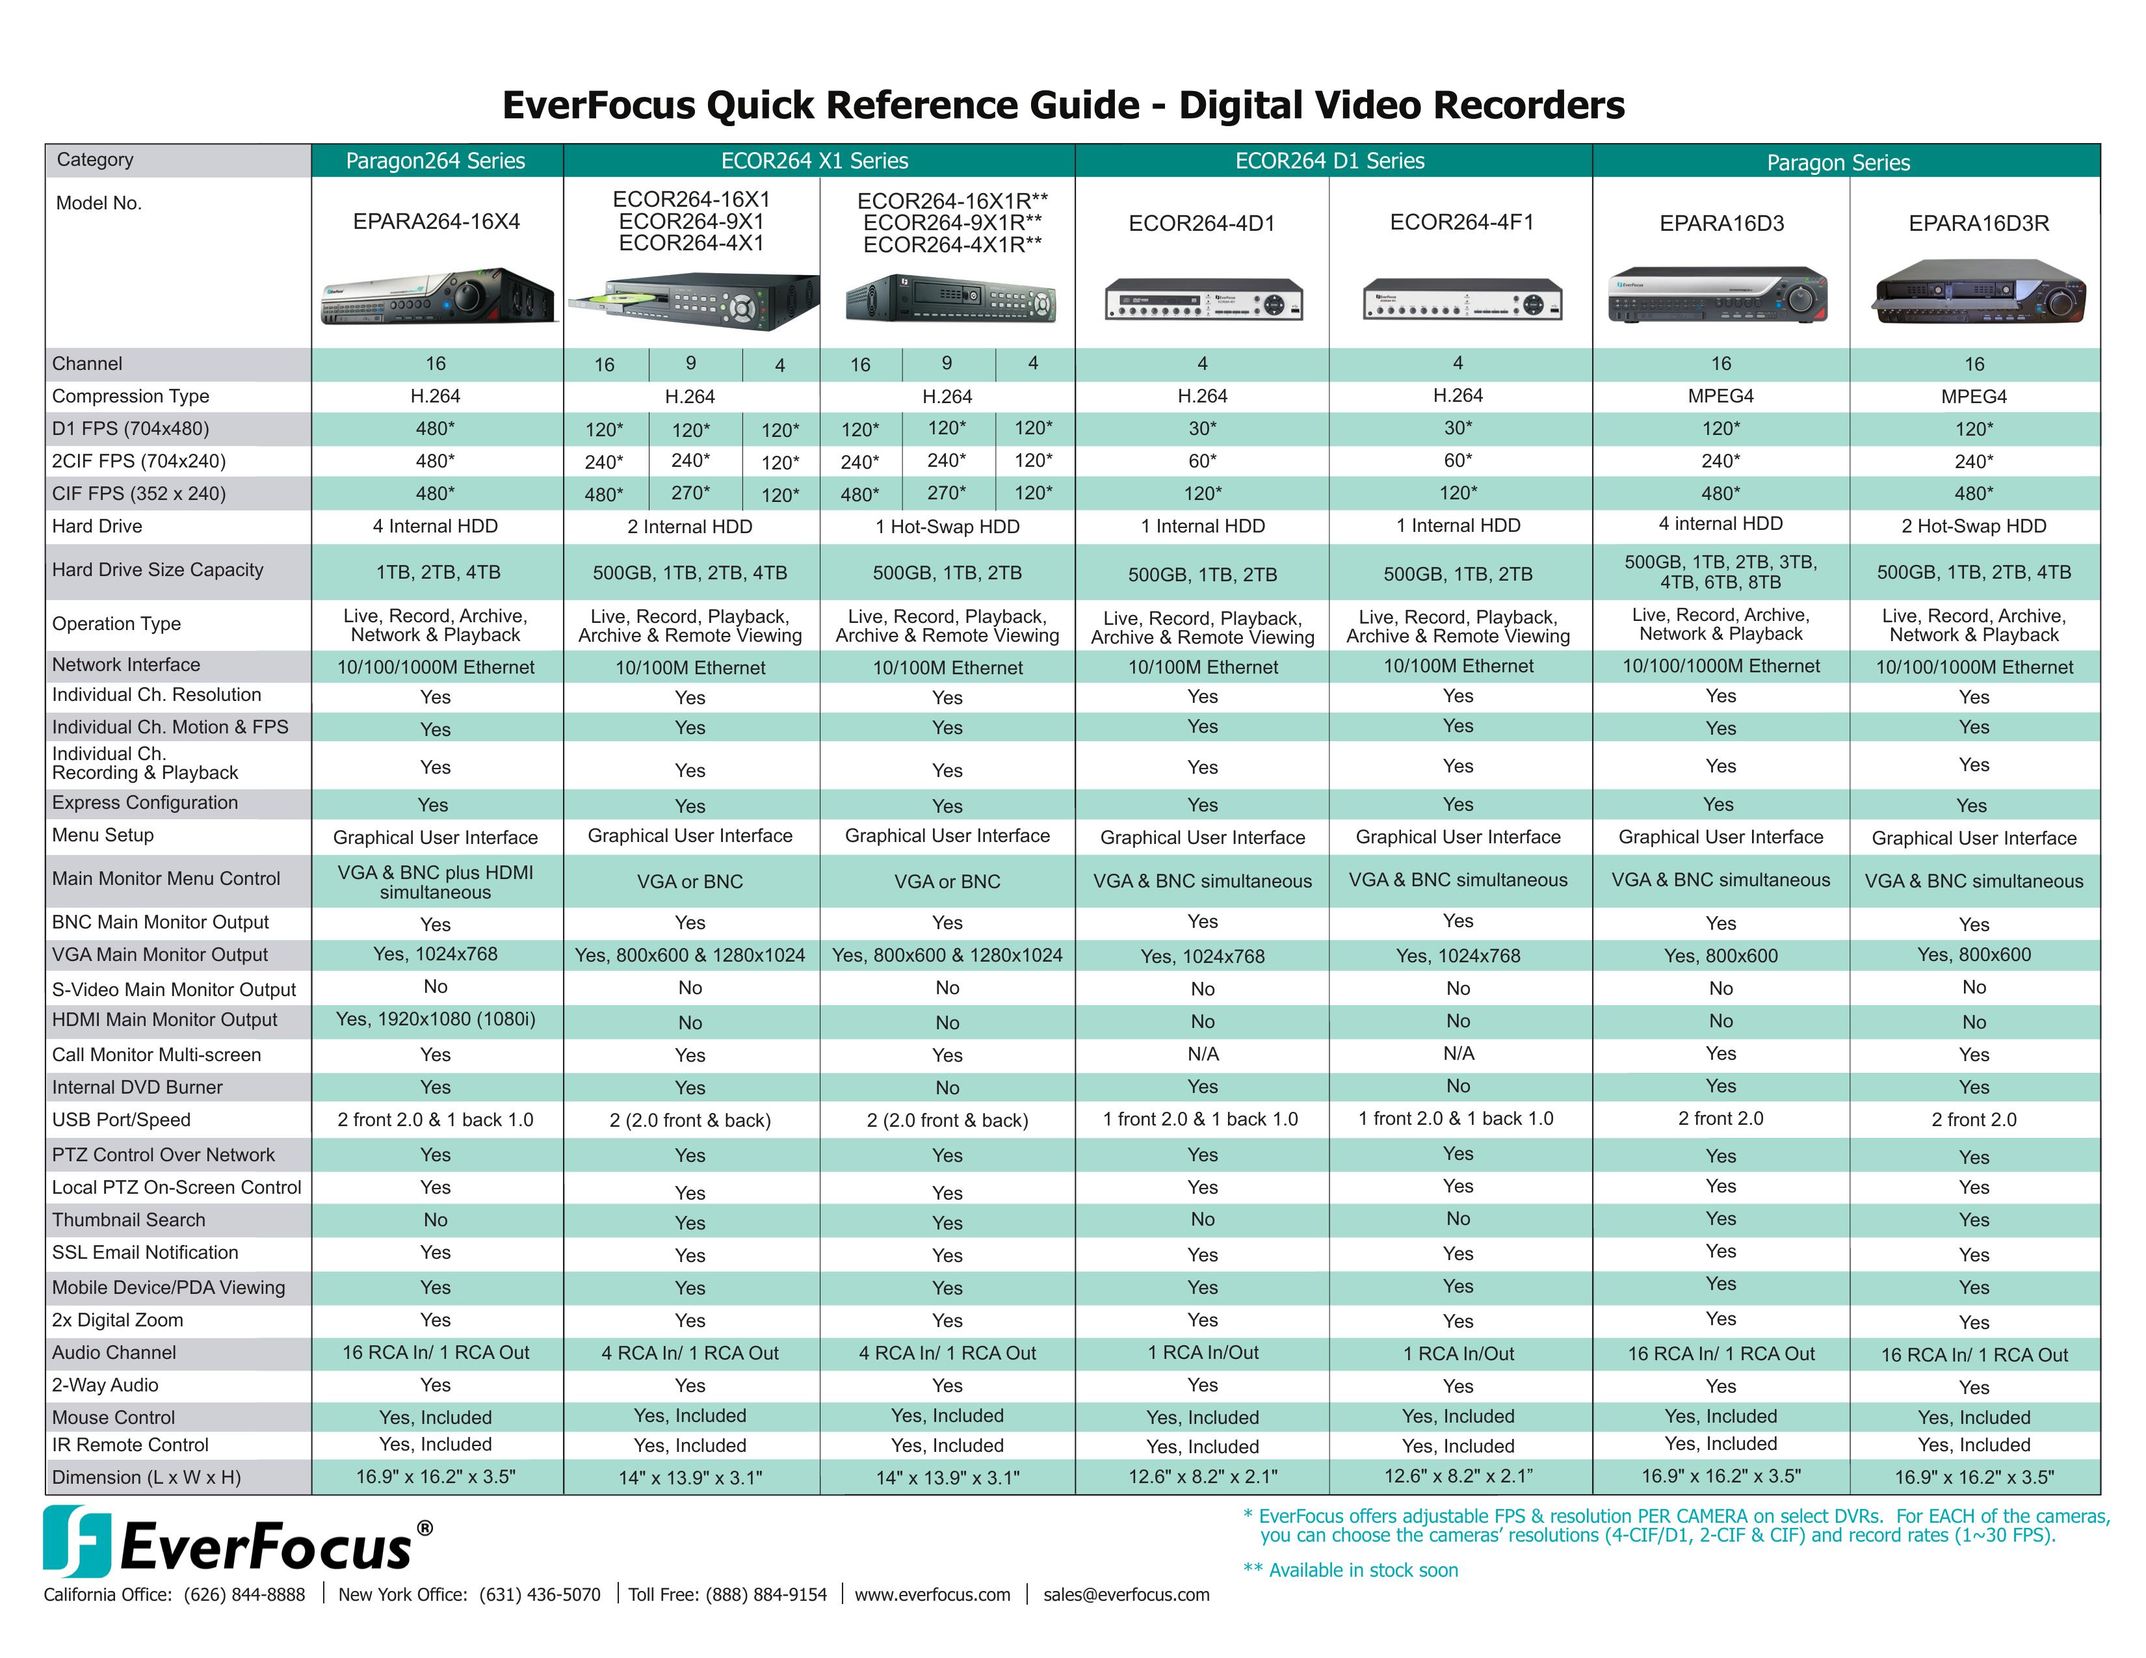 EverFocus ECOR264-16X1 DVR User Manual